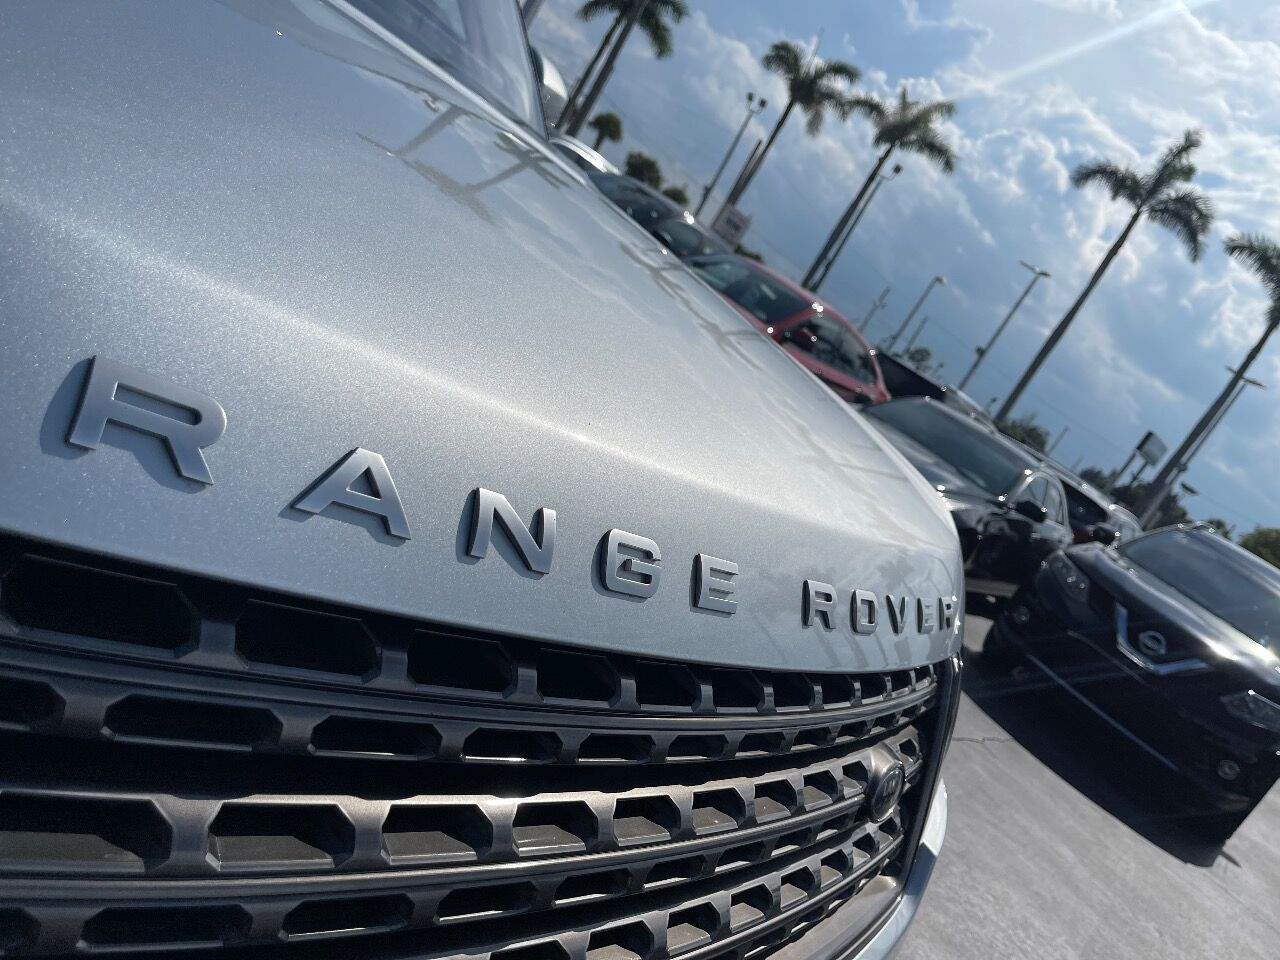 2016 LAND ROVER Range Rover SUV / Crossover - $27,900